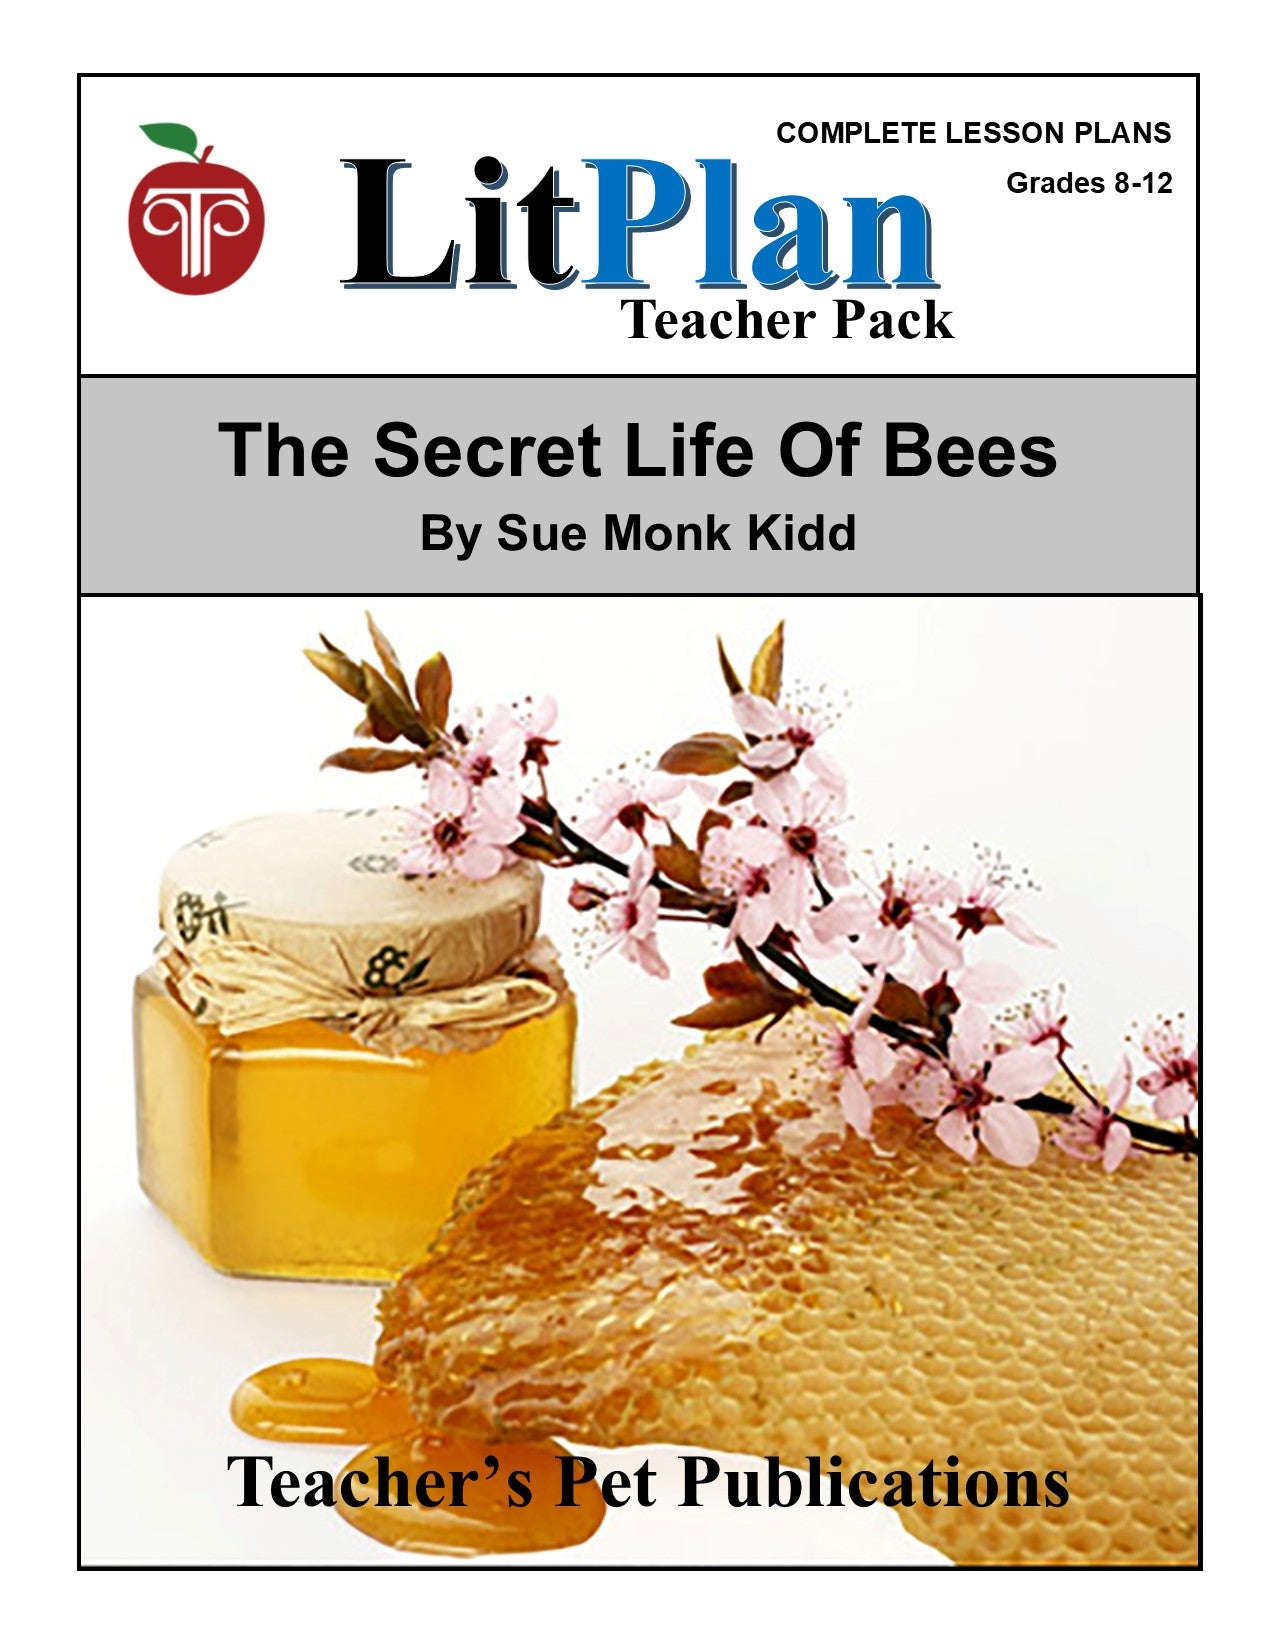 The Secret Life of Bees: LitPlan Teacher Pack Grades 8-12